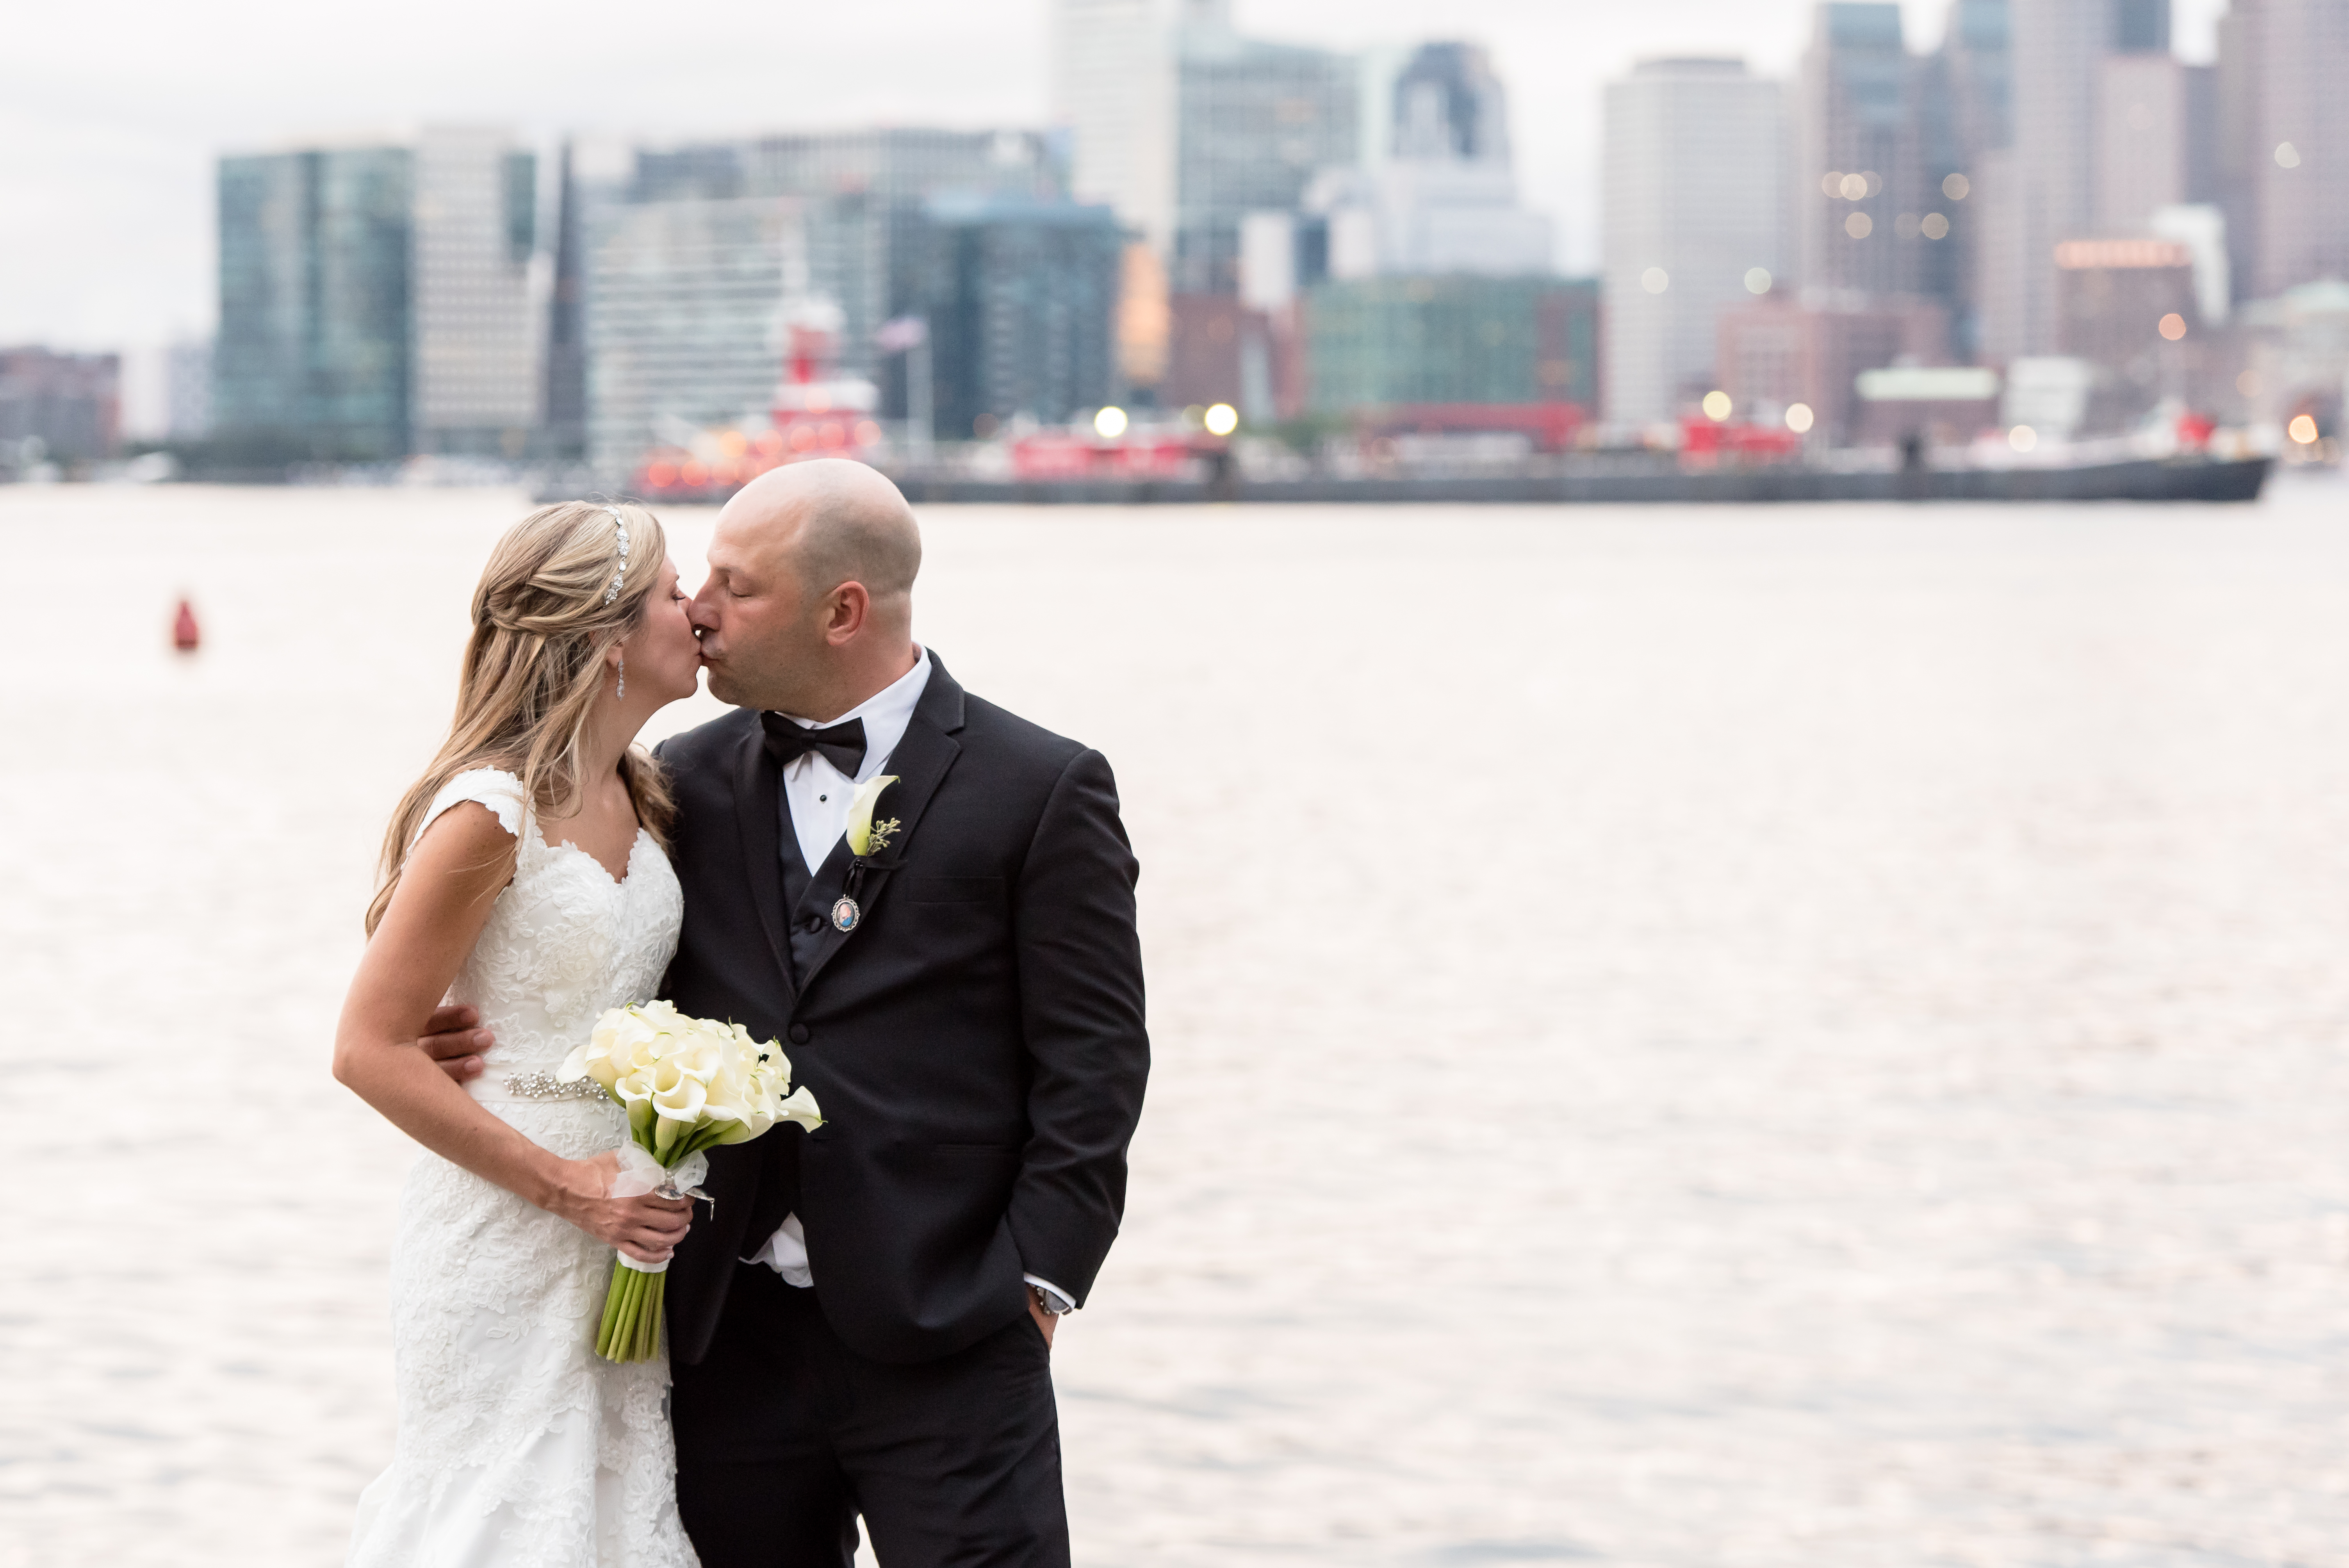 Hyatt Regency Boston Harbor wedding photos